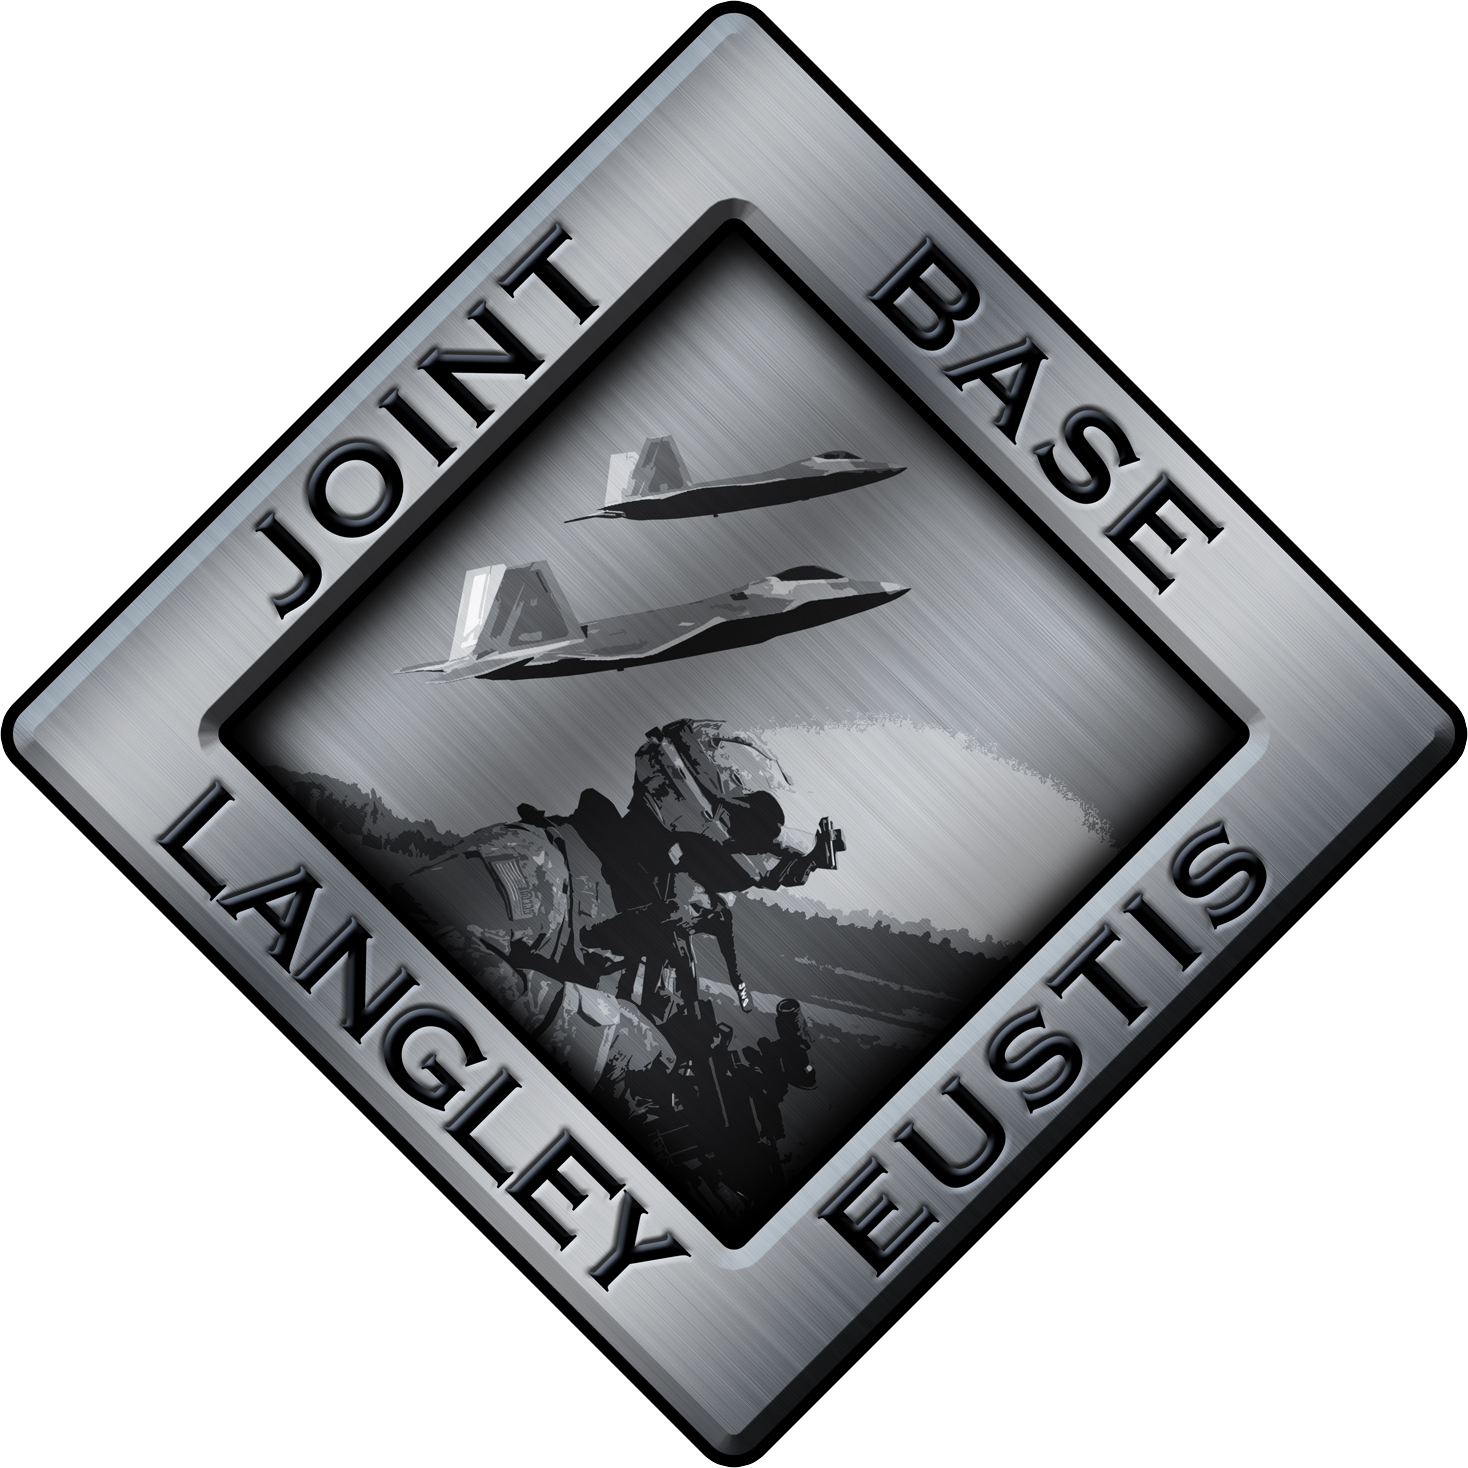 Joint Base Langley-Eustis logo